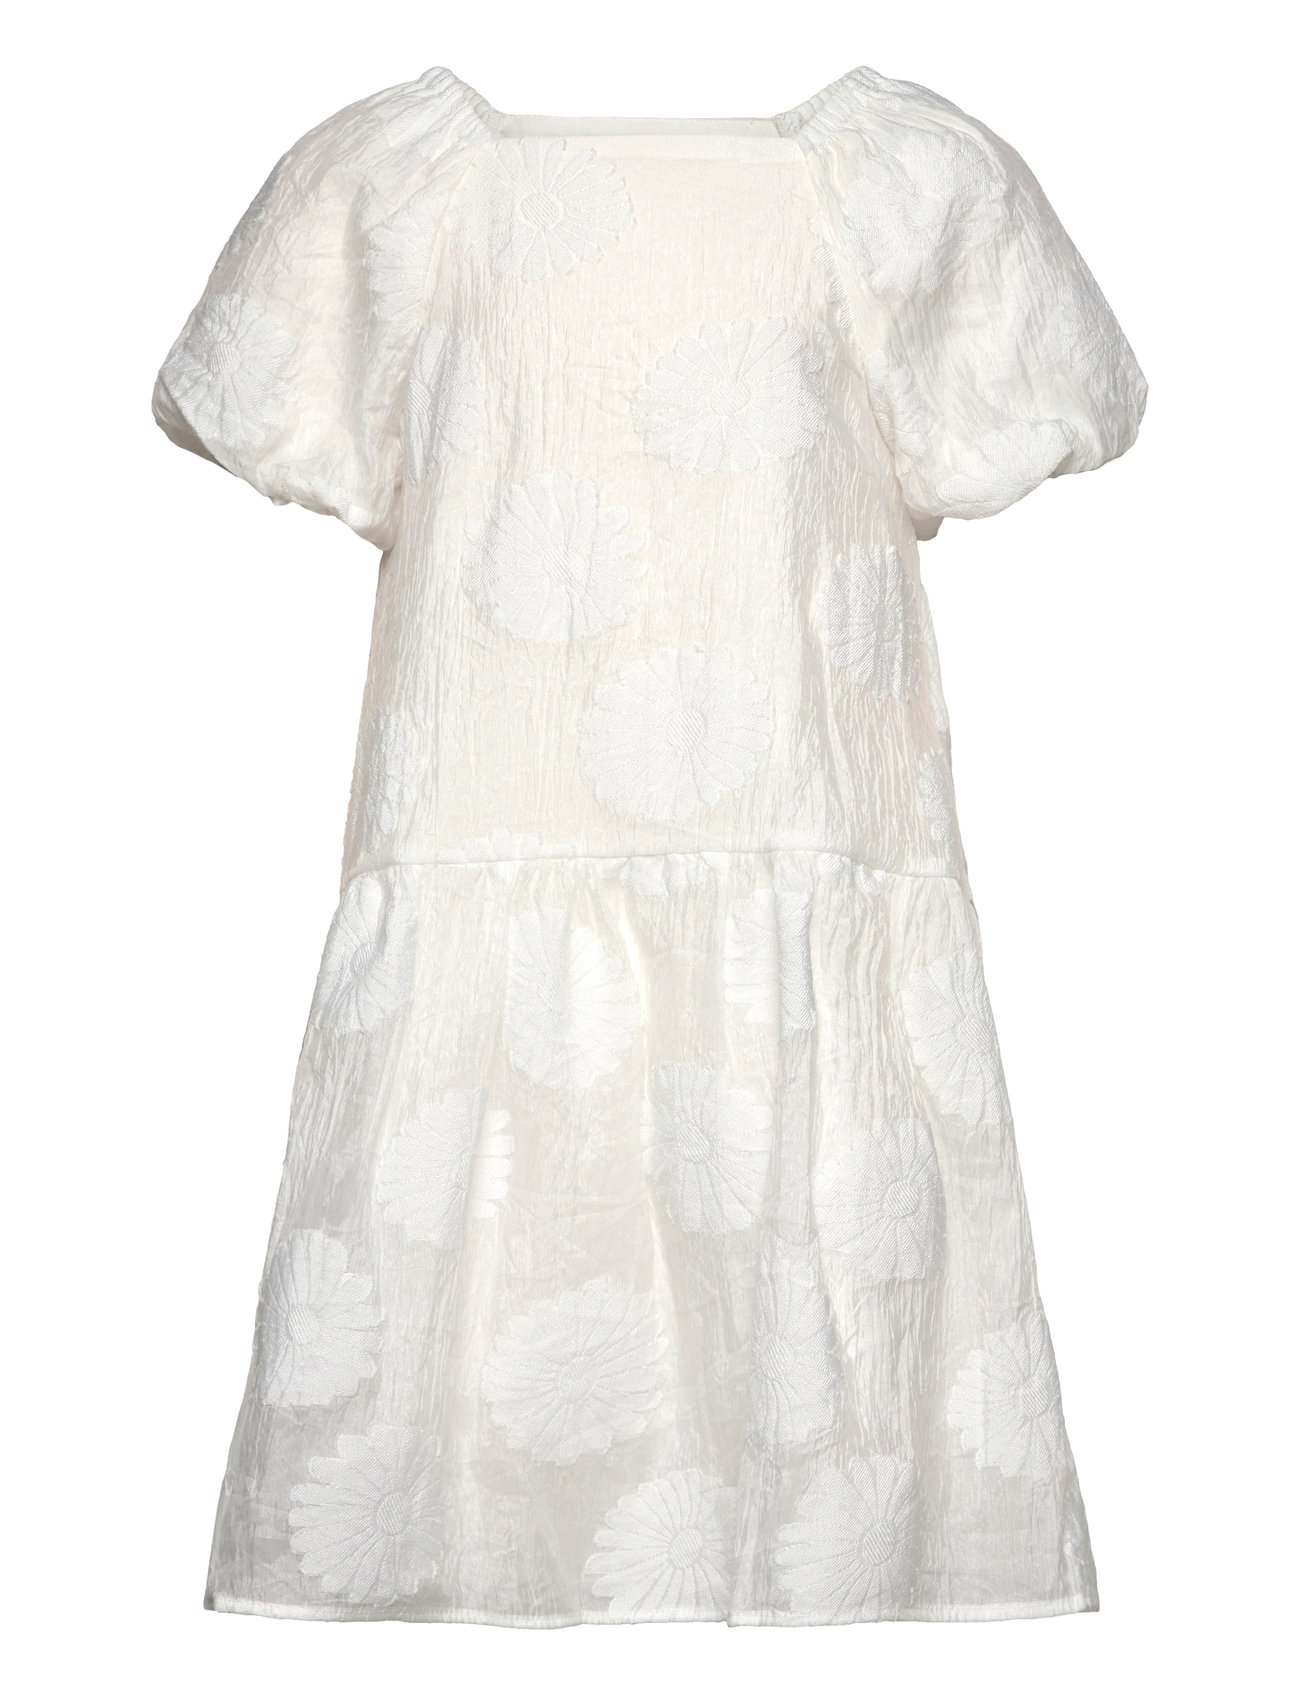 Floral Embroidery Dress Dresses & Skirts Dresses Casual Dresses Short-sleeved Casual Dresses White Mango